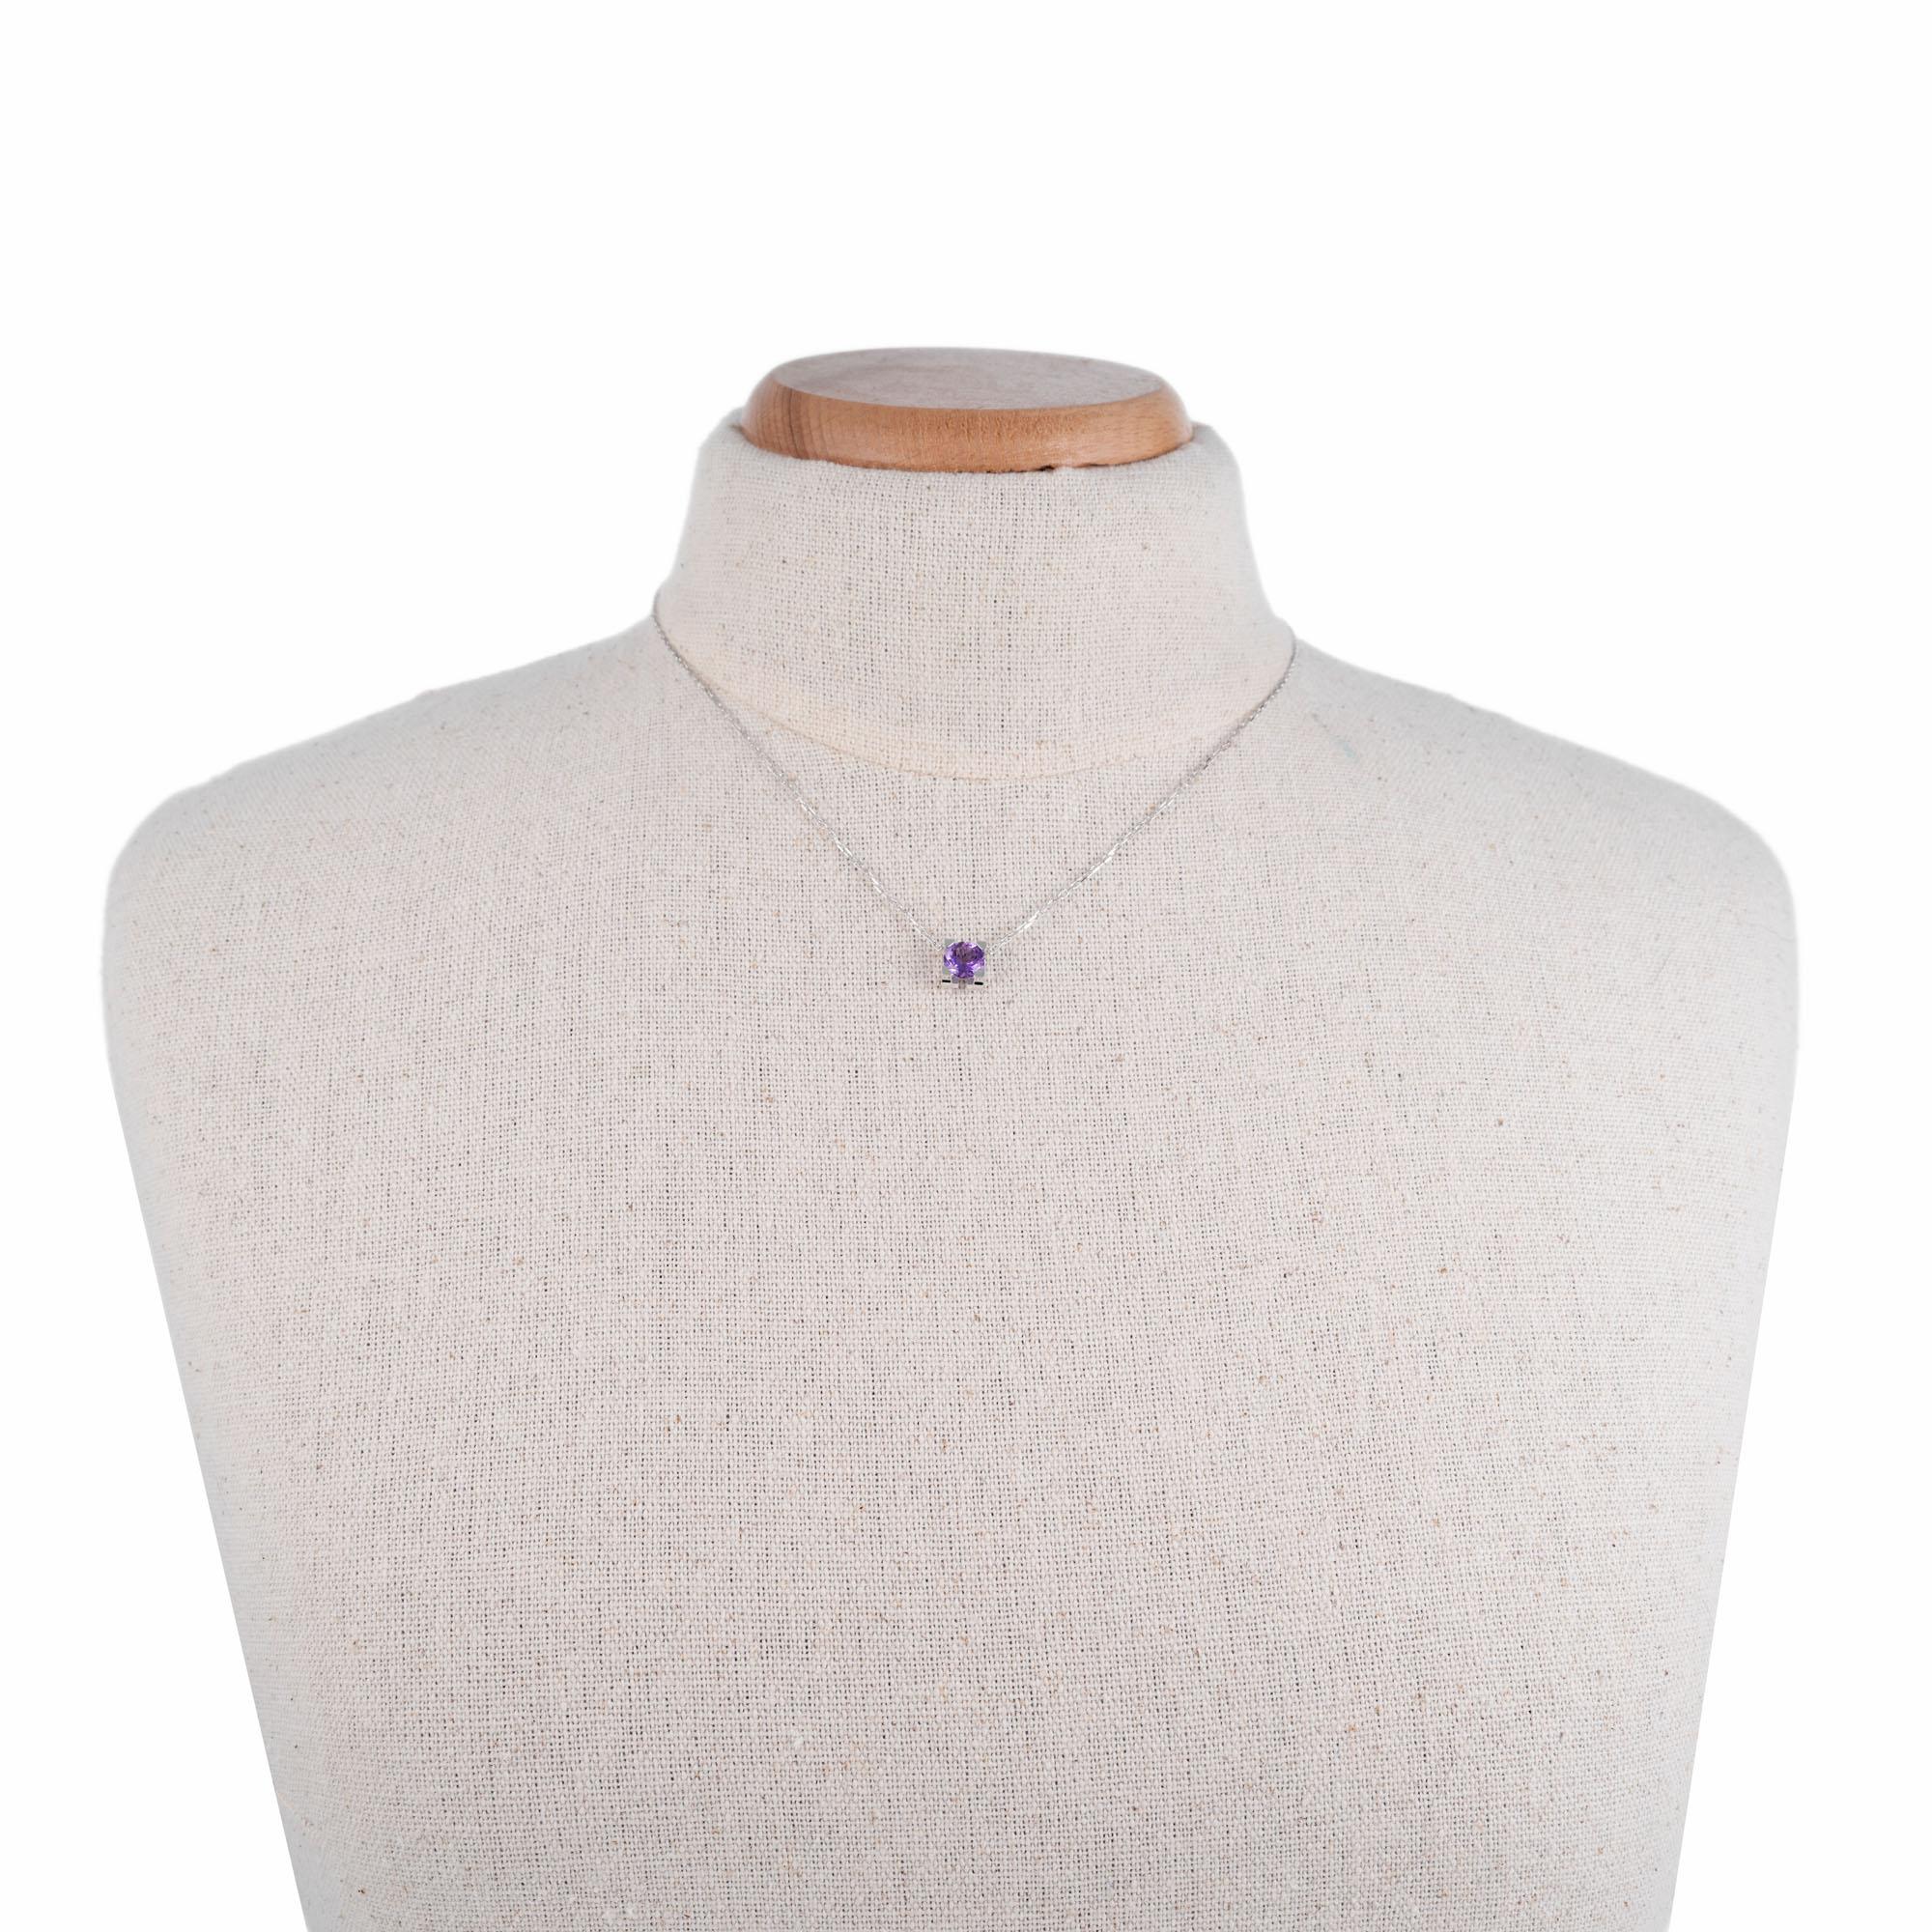 Round Cut Cartier 1.00 Carat Purple Amethyst White Gold Pendant Necklace